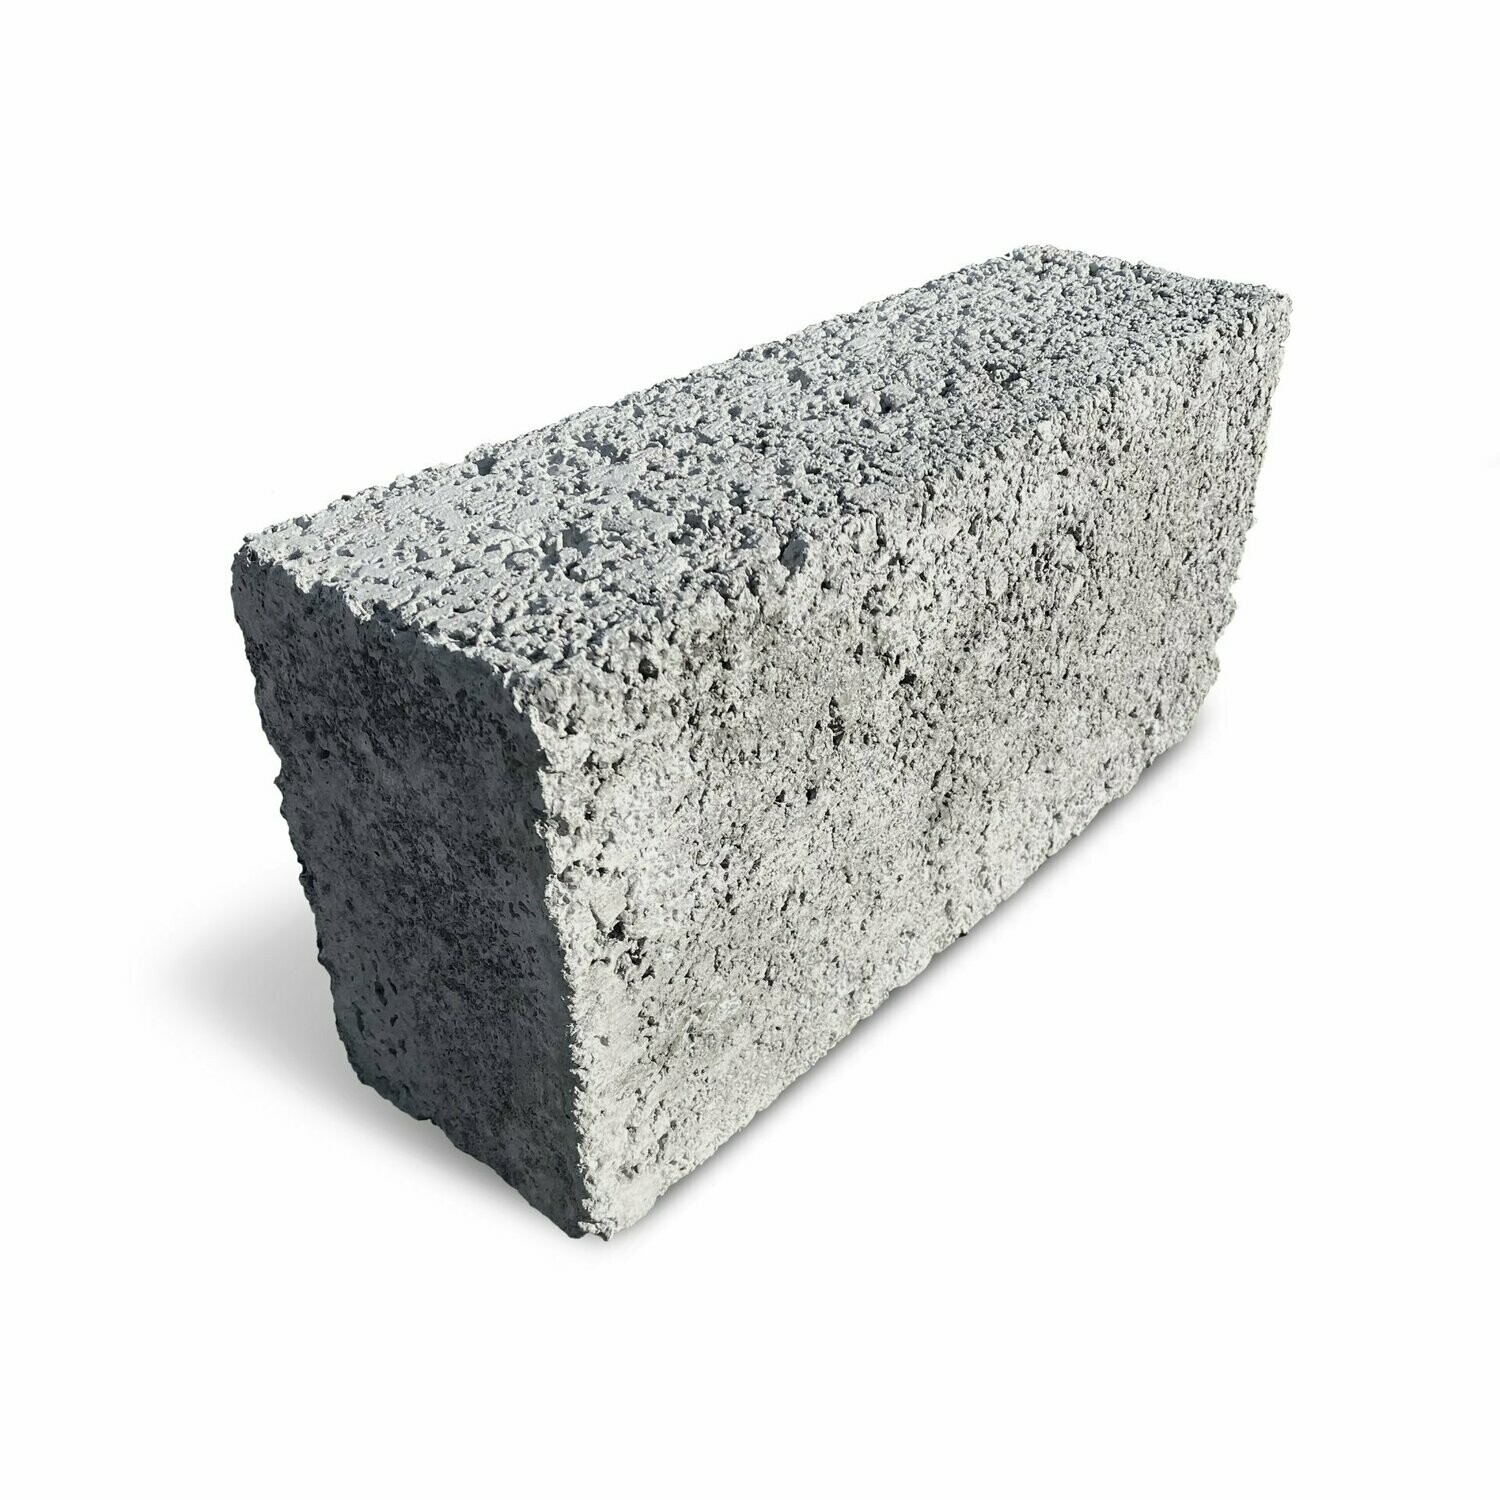 140mm CONCRETE BLOCK, Quantity: Concrete Block - Individual